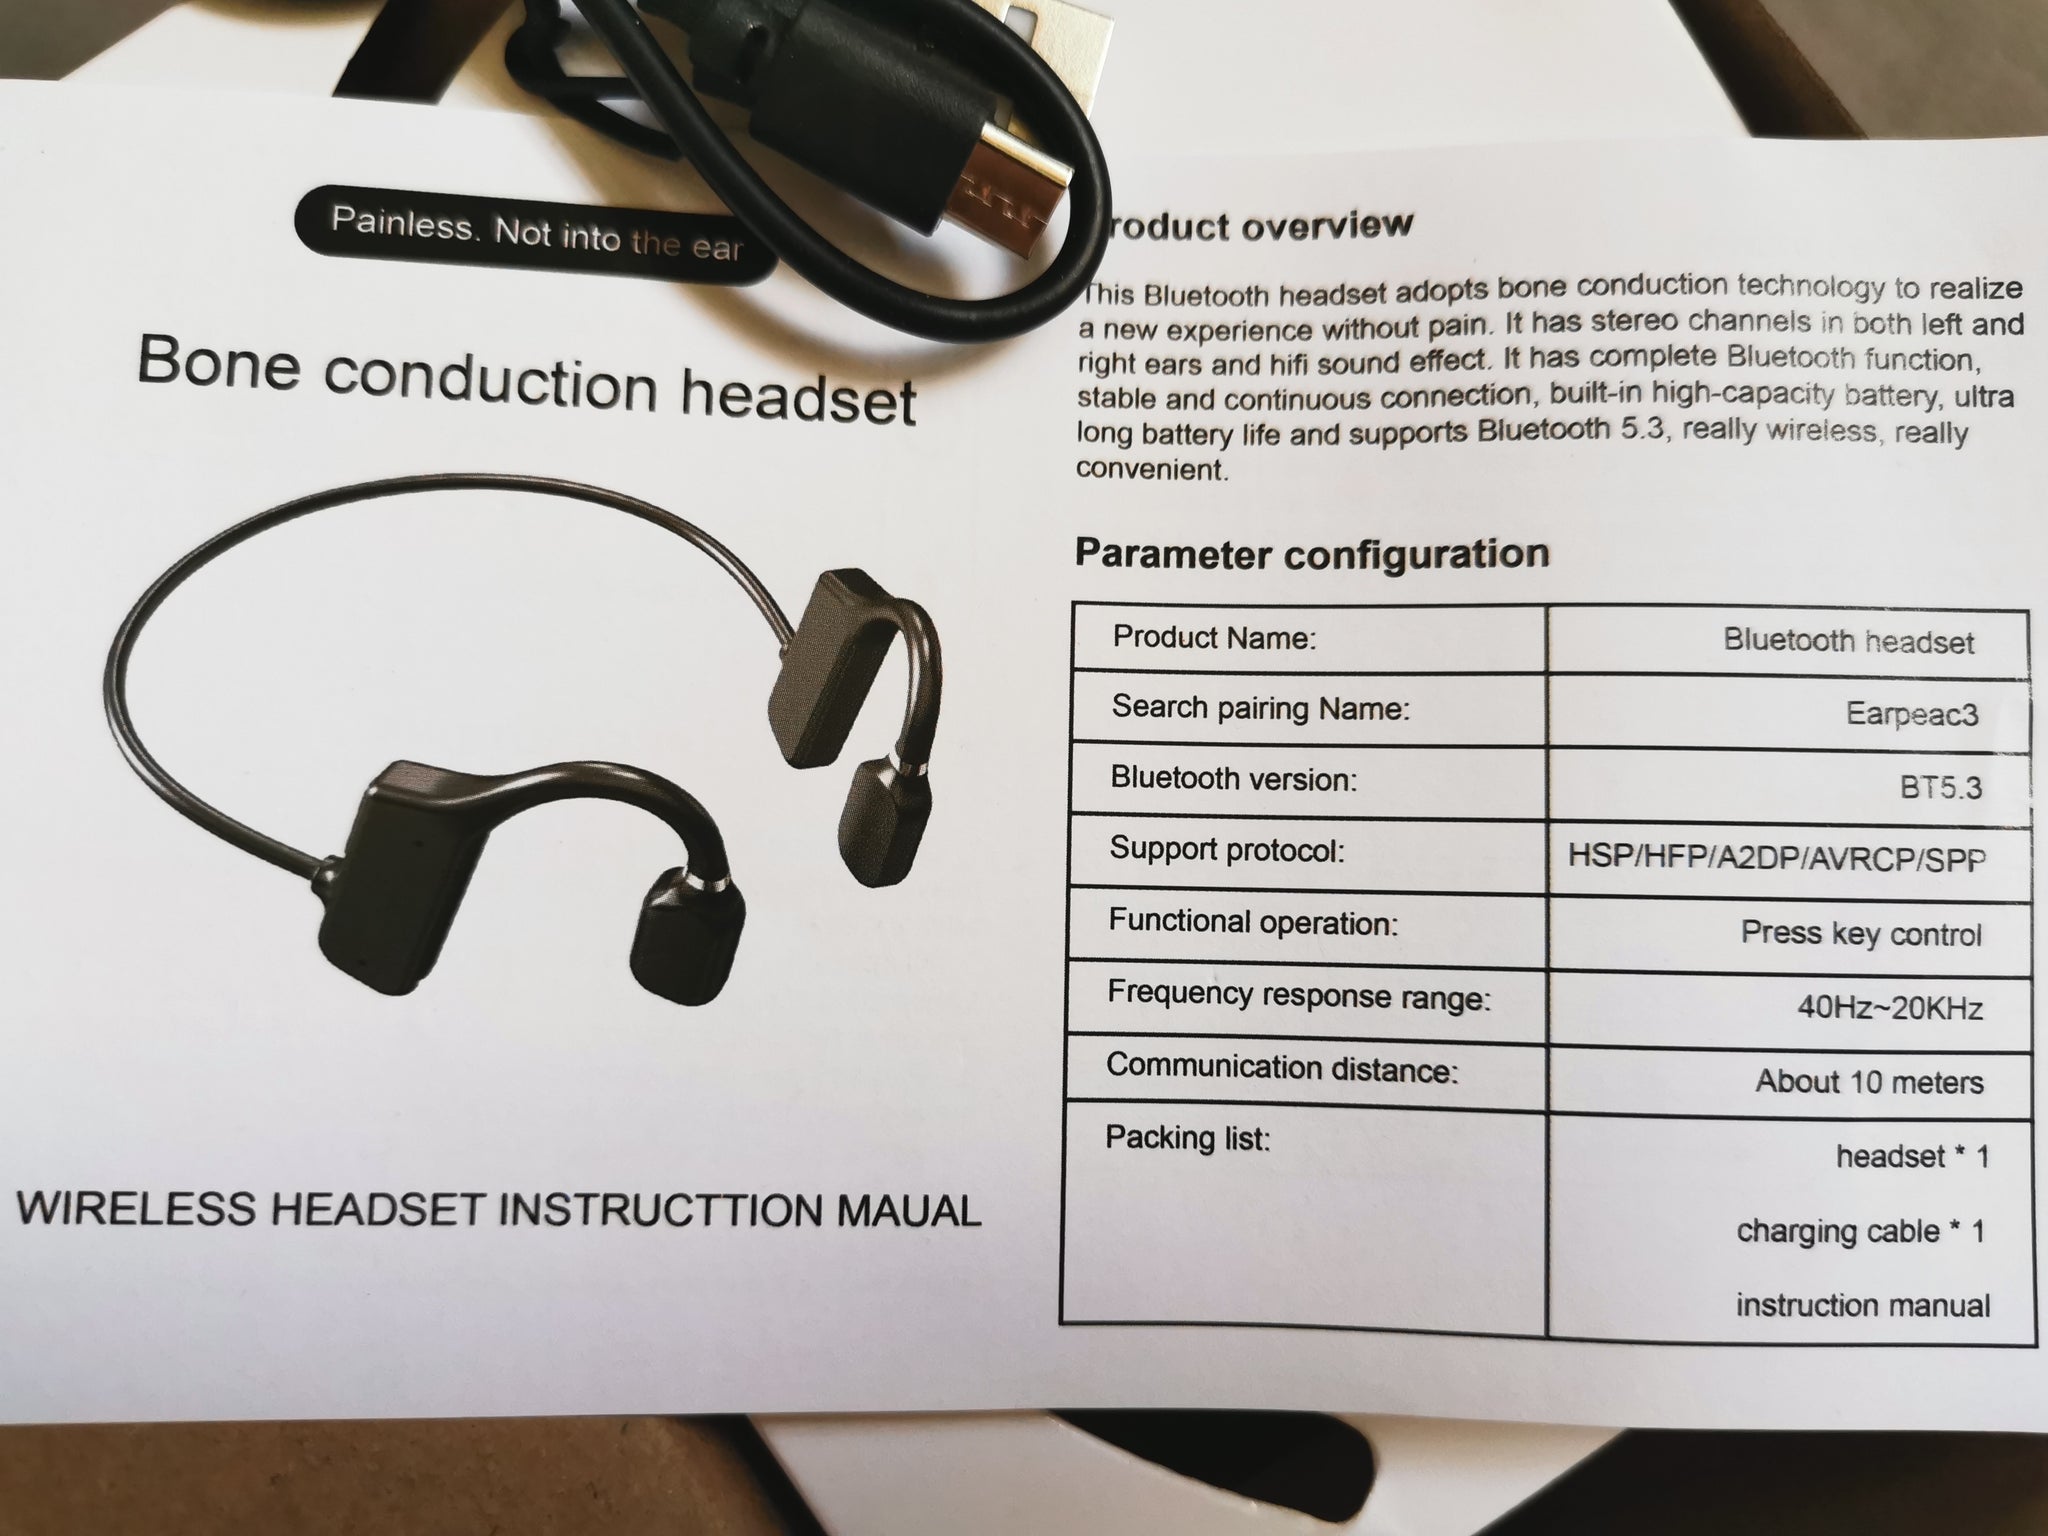 [EARPEAC3] NEW!! Bone Conduction Headset